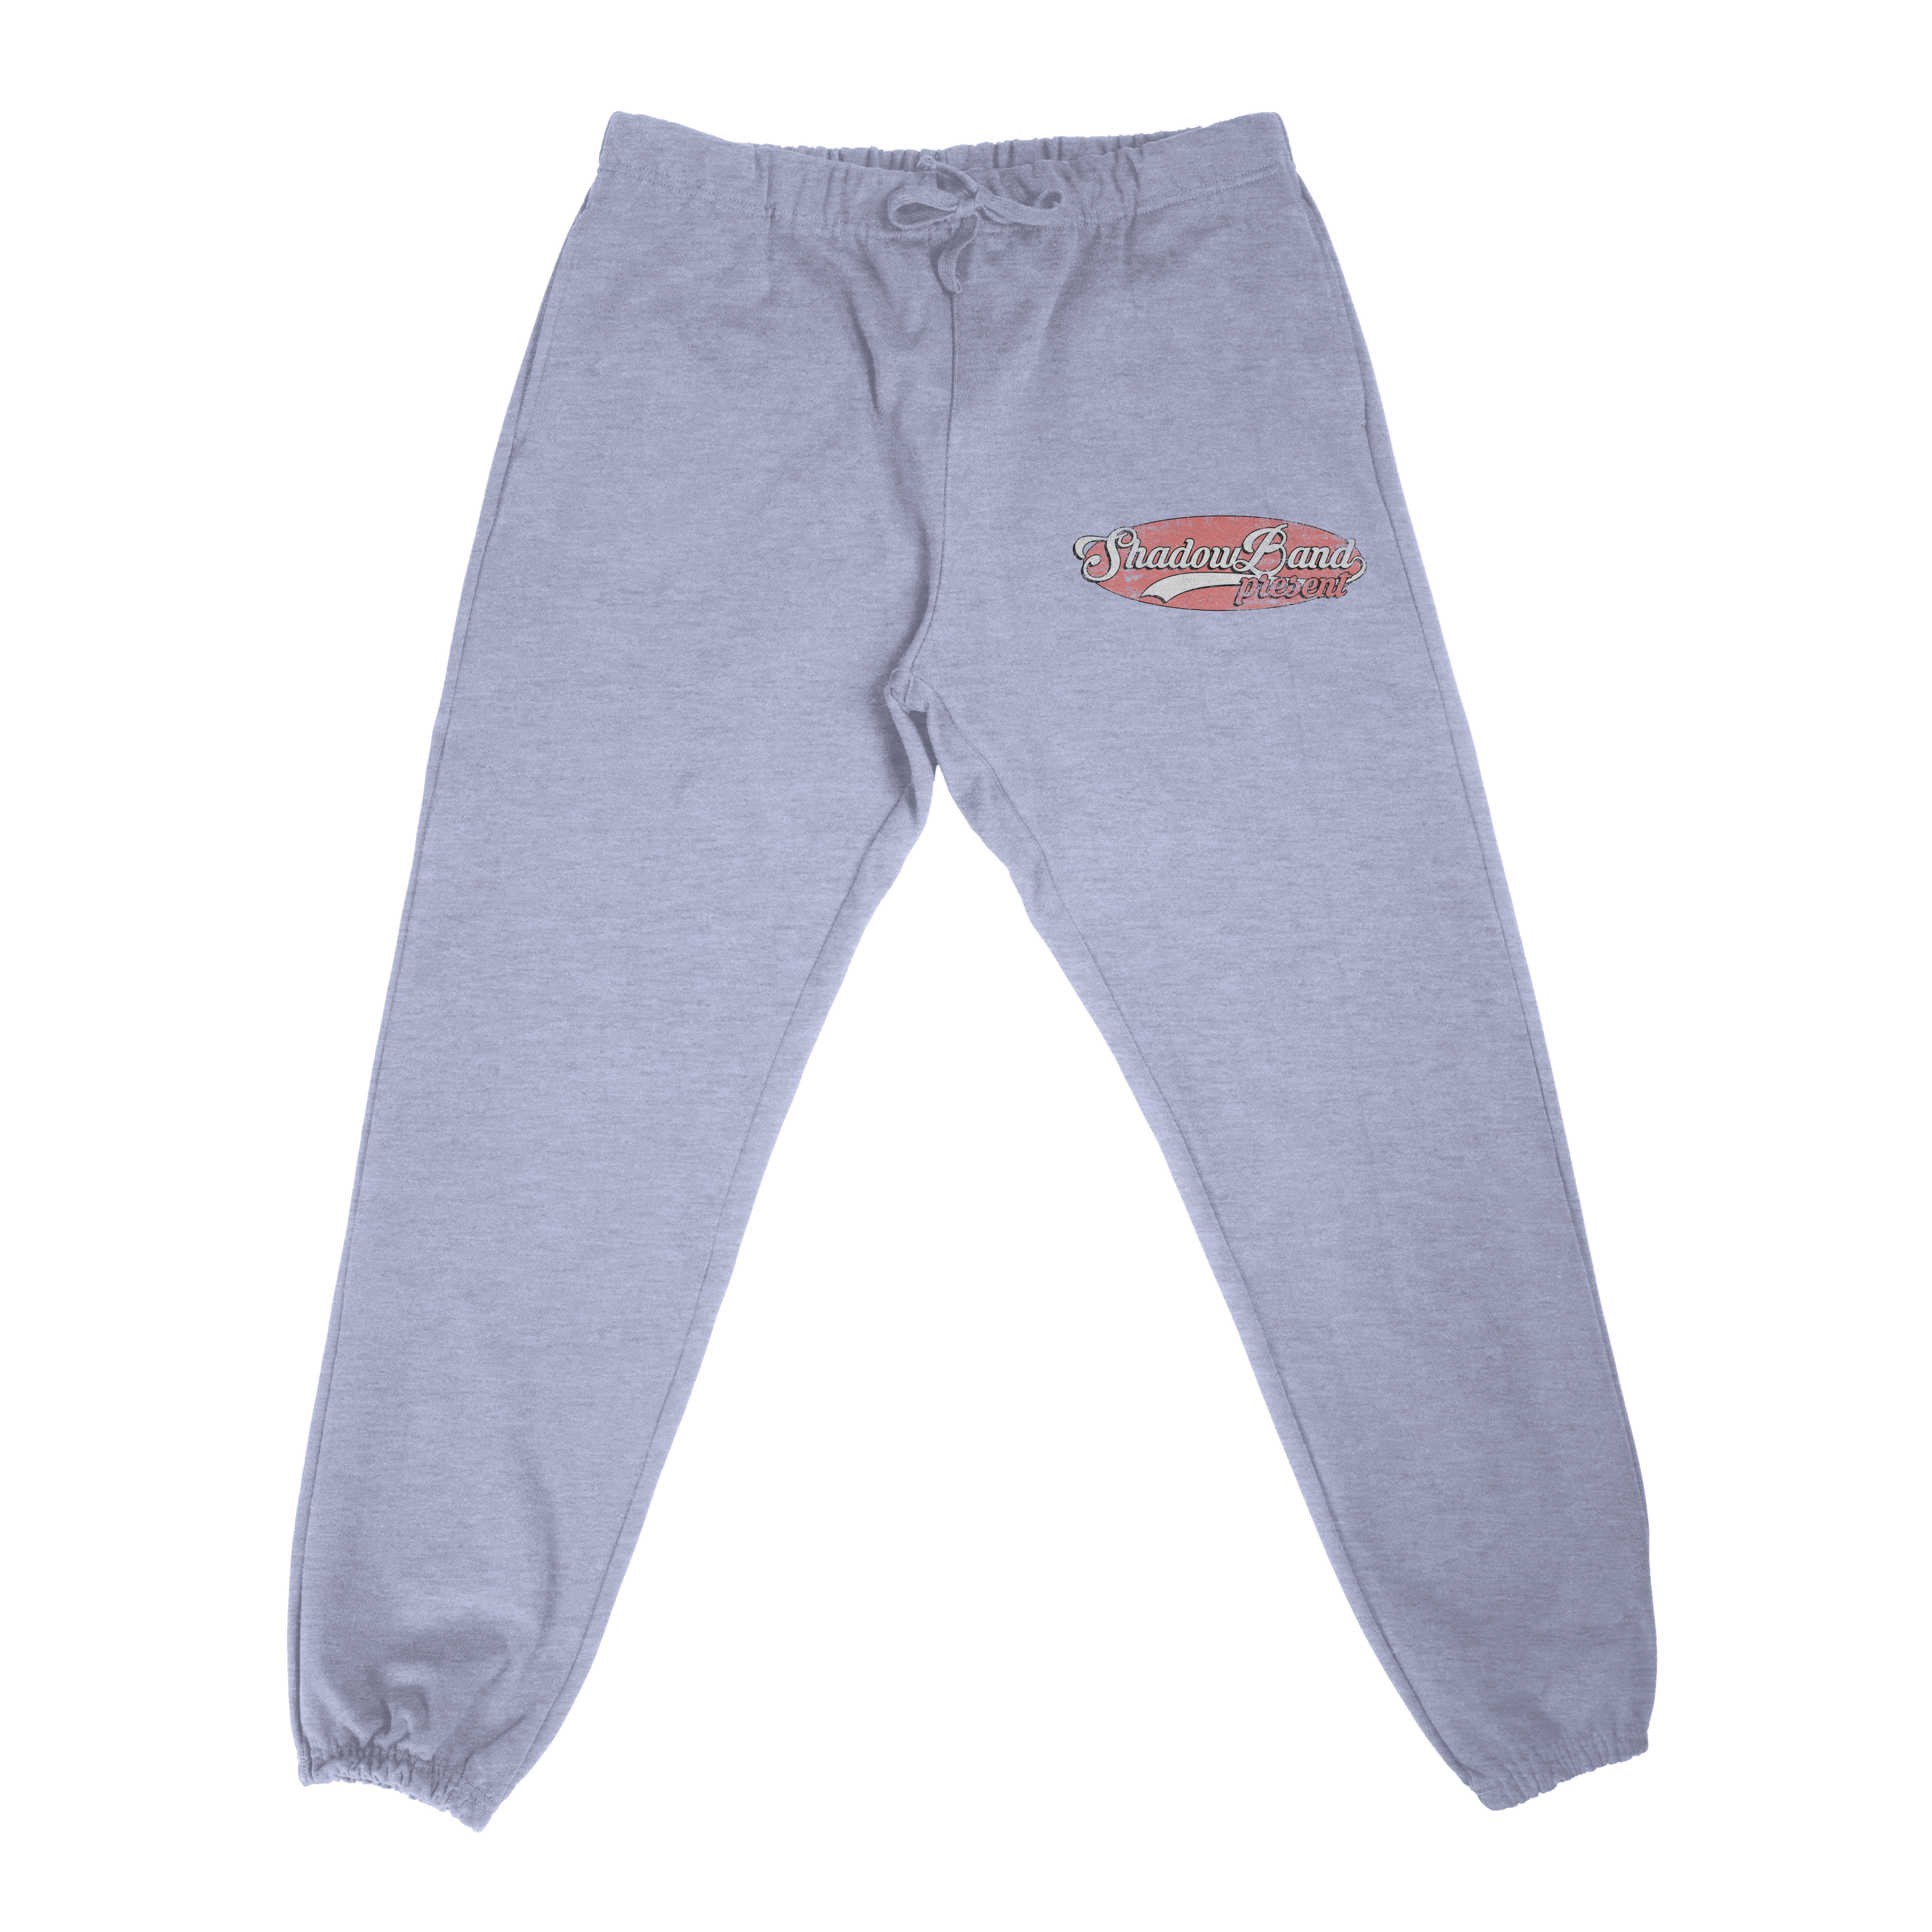 SB Presents Sweat Pants Grey